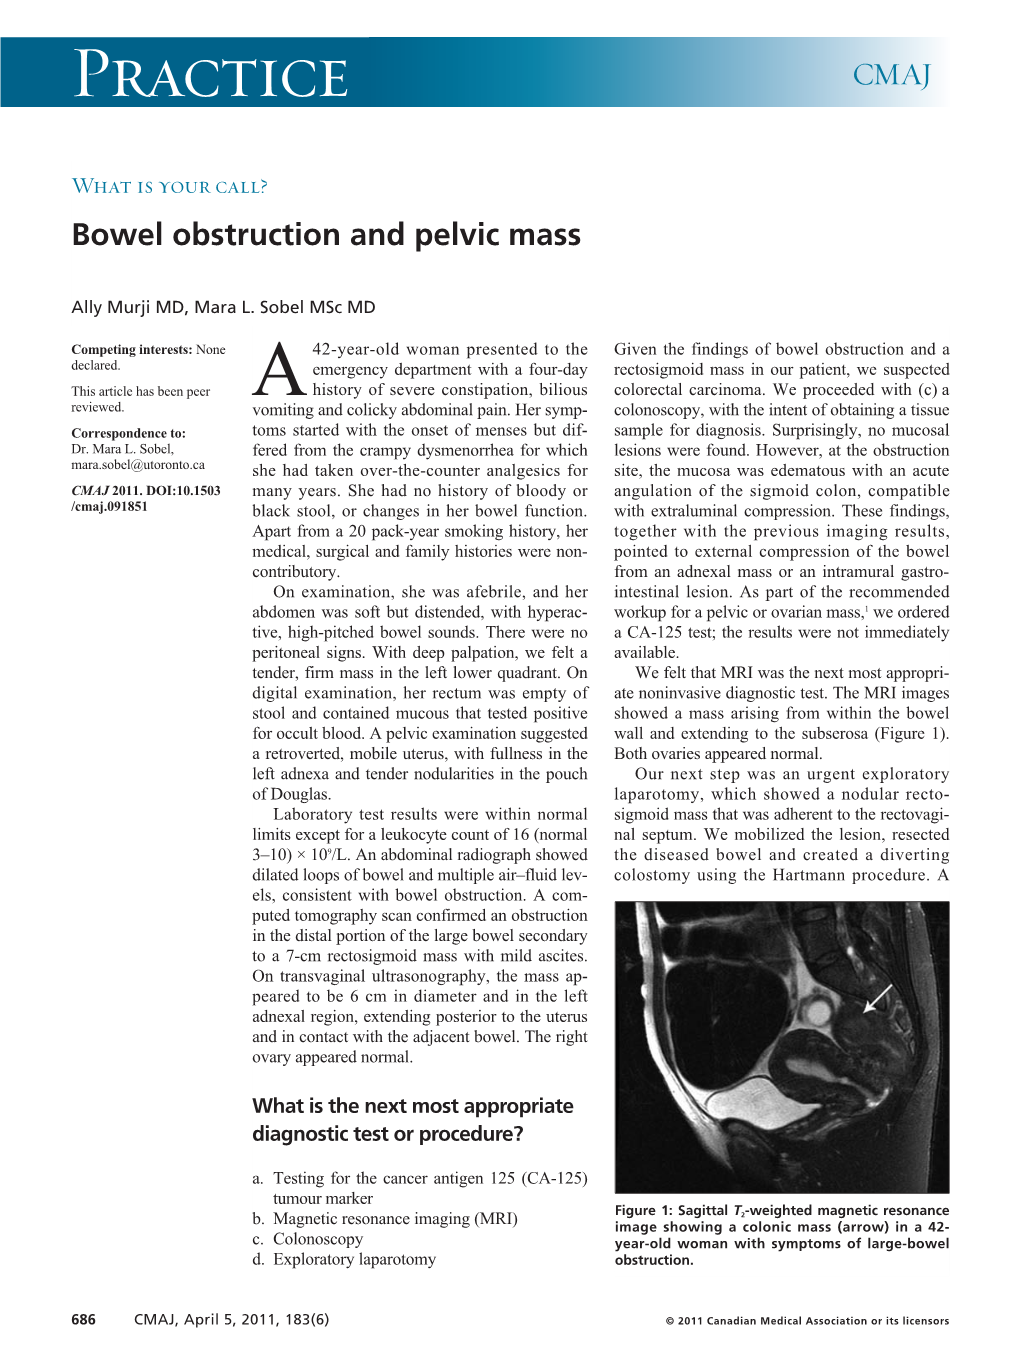 Bowel Obstruction and Pelvic Mass